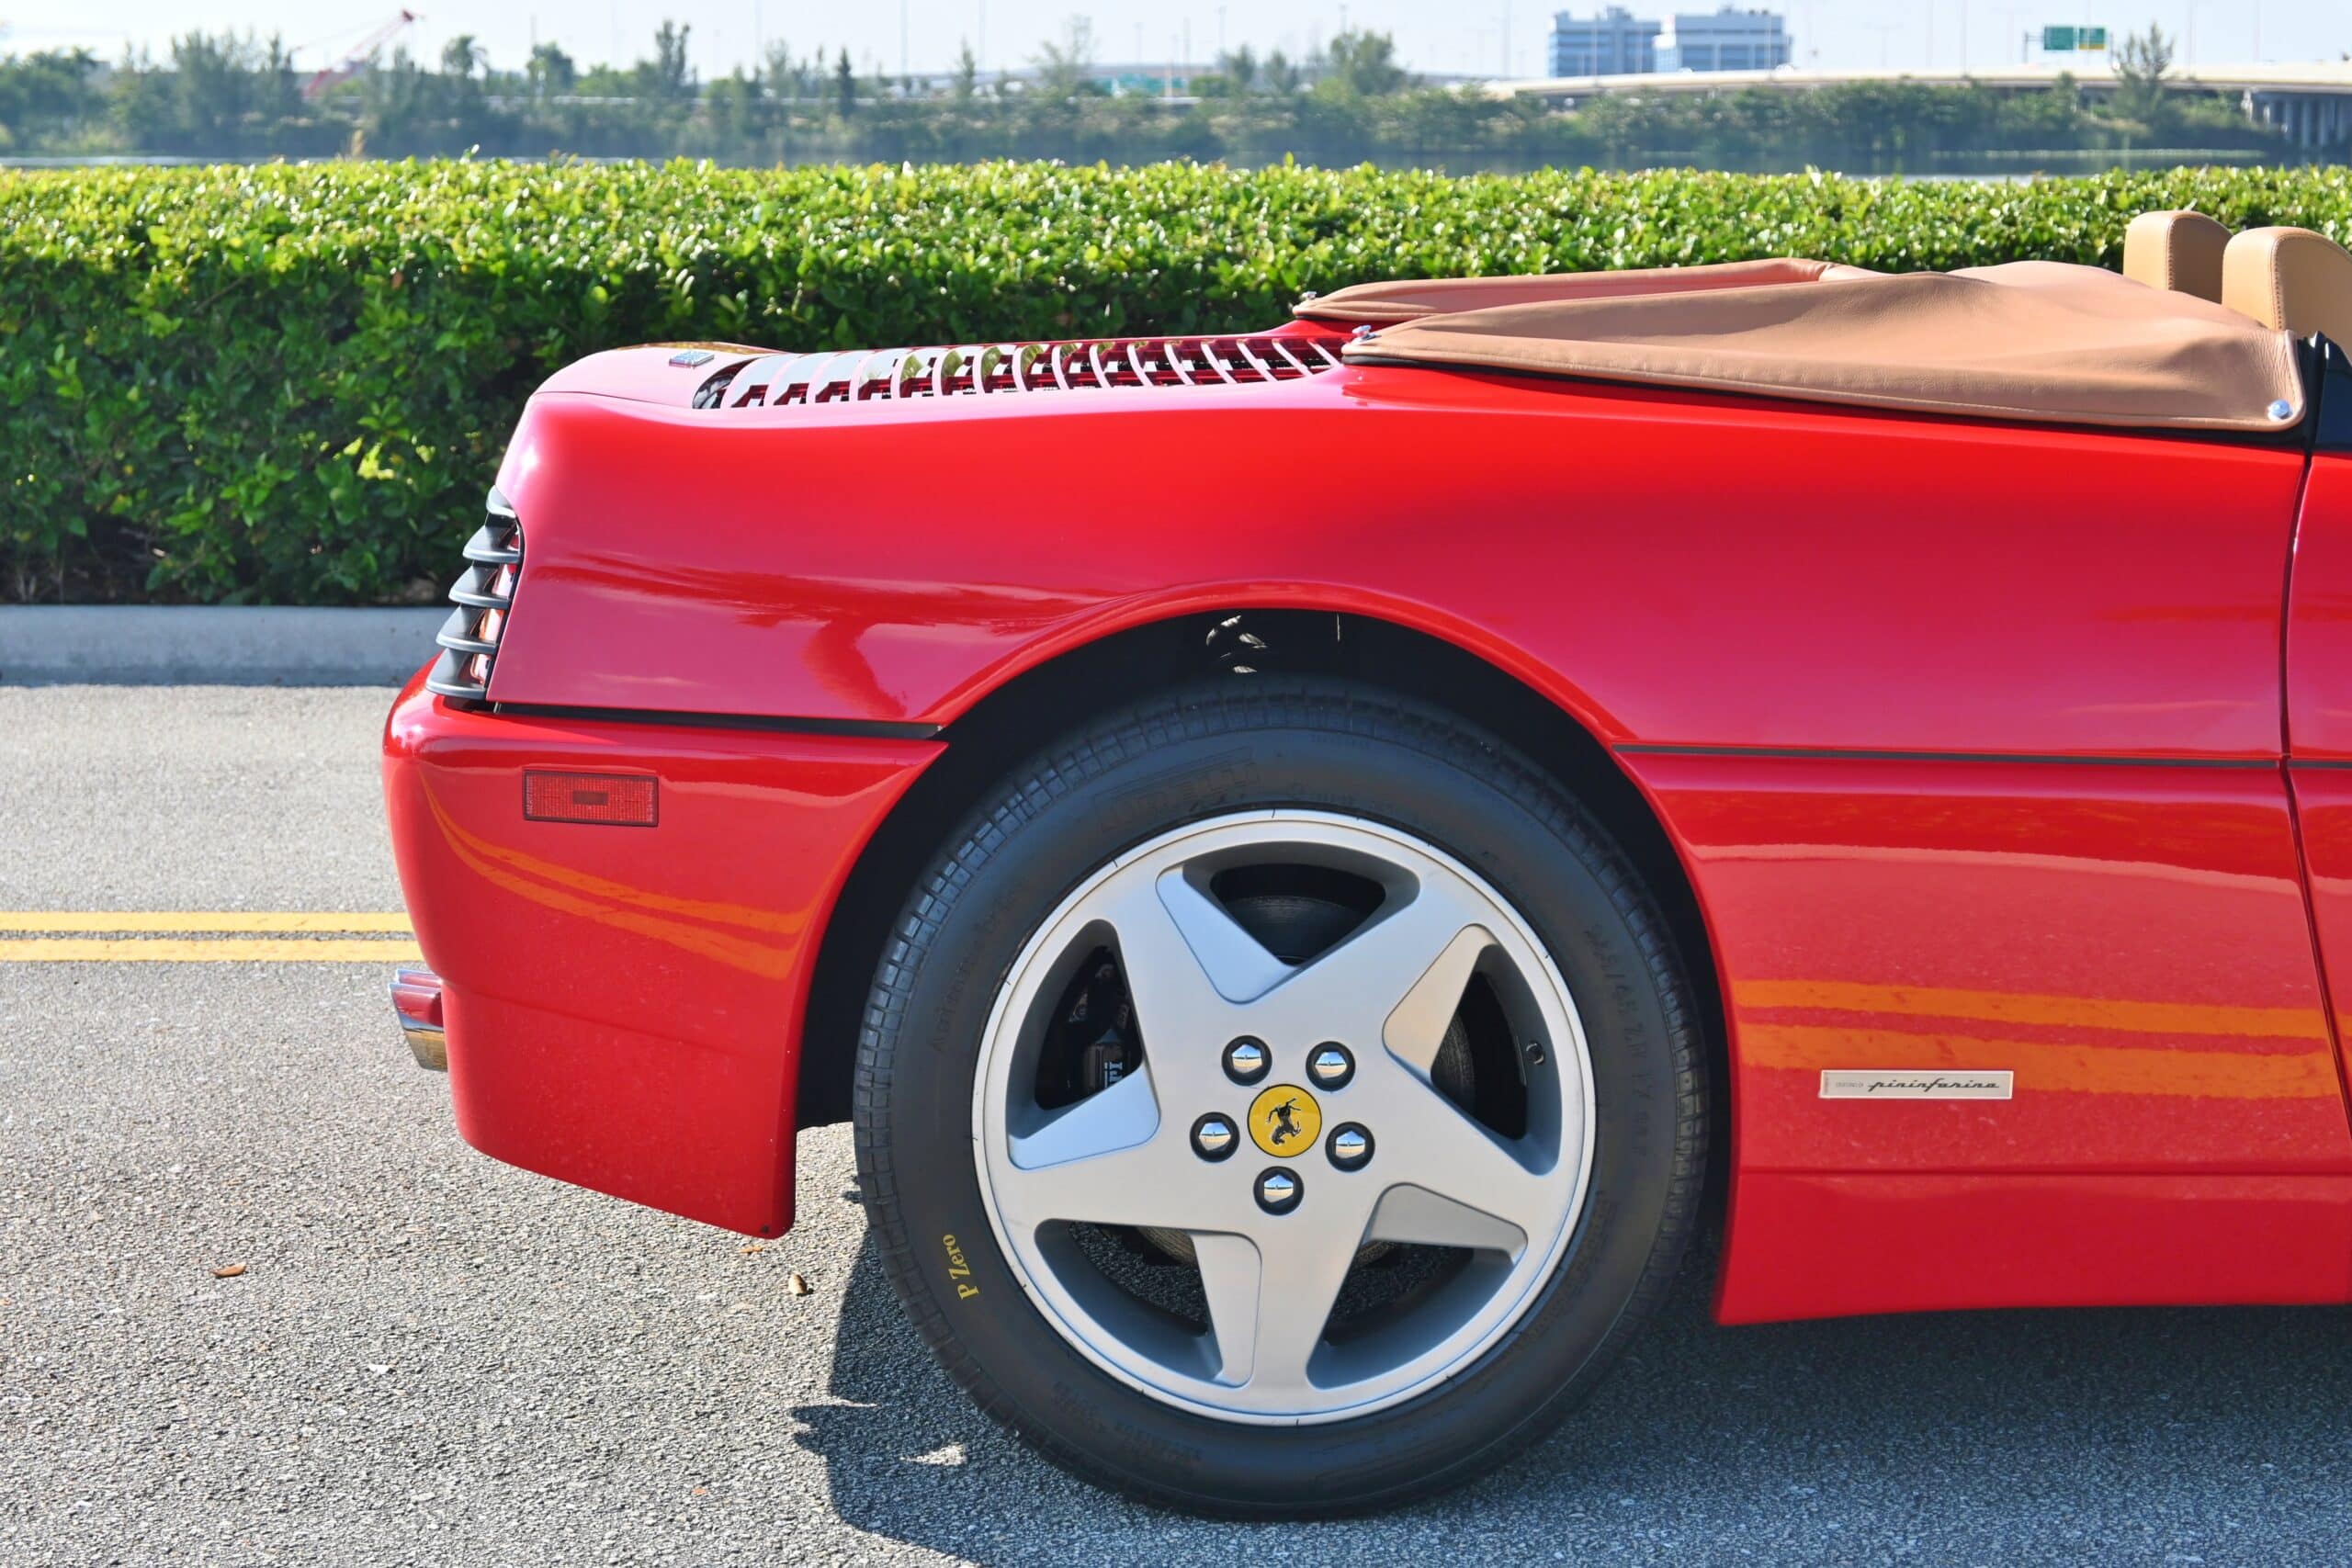 1995 Ferrari 348 Spider Gated 5 Speed Dogleg – Timing belt & clutch service done – Documented History